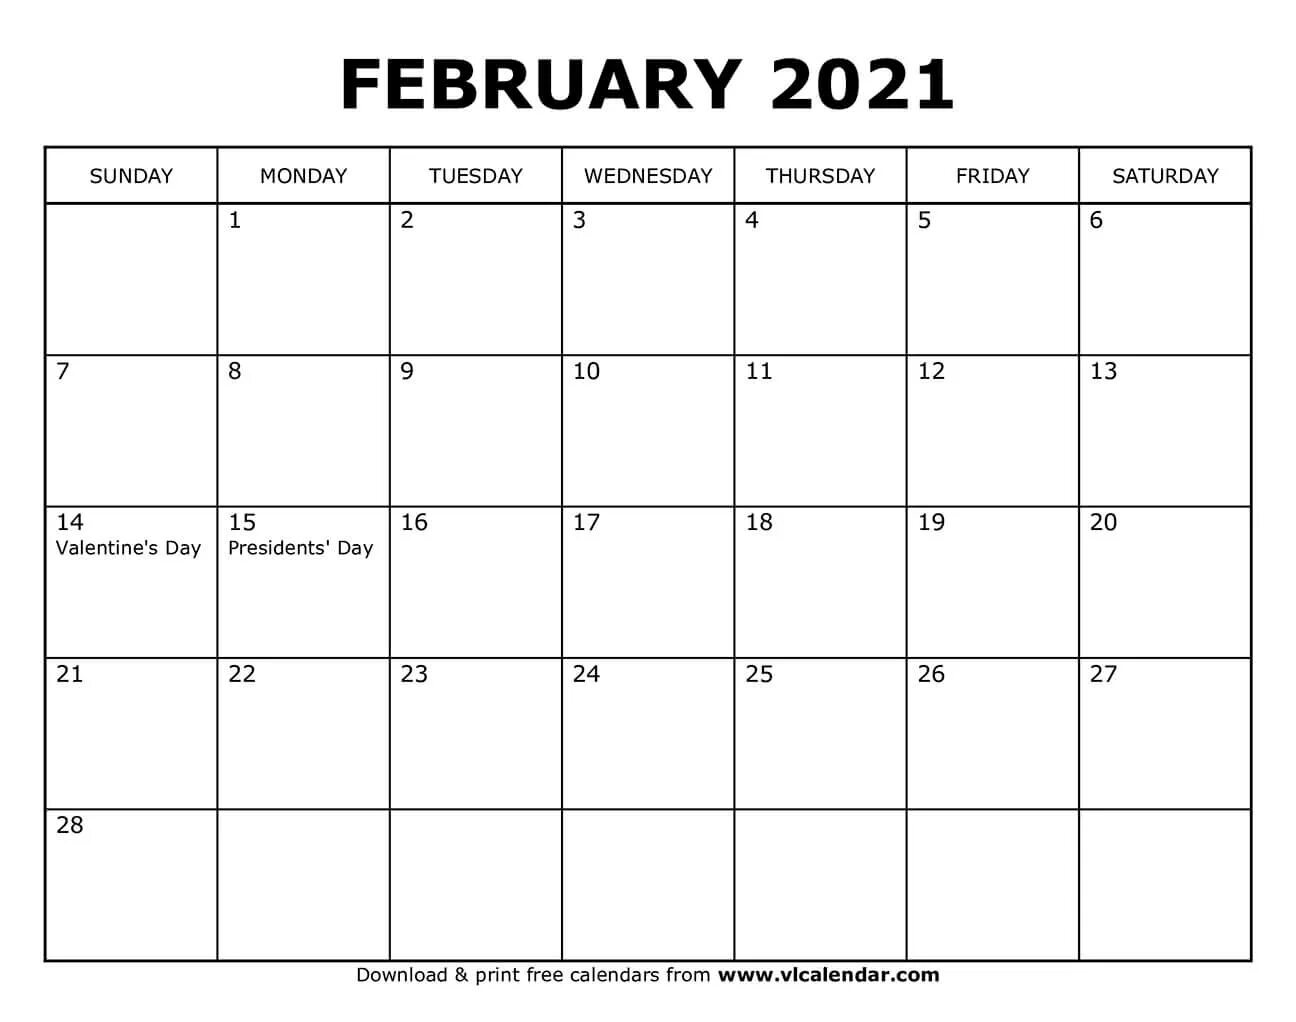 Февраль 2021 года. Календарь февраль. Календарь планер на февраль. Февраль 2021 года календарь.